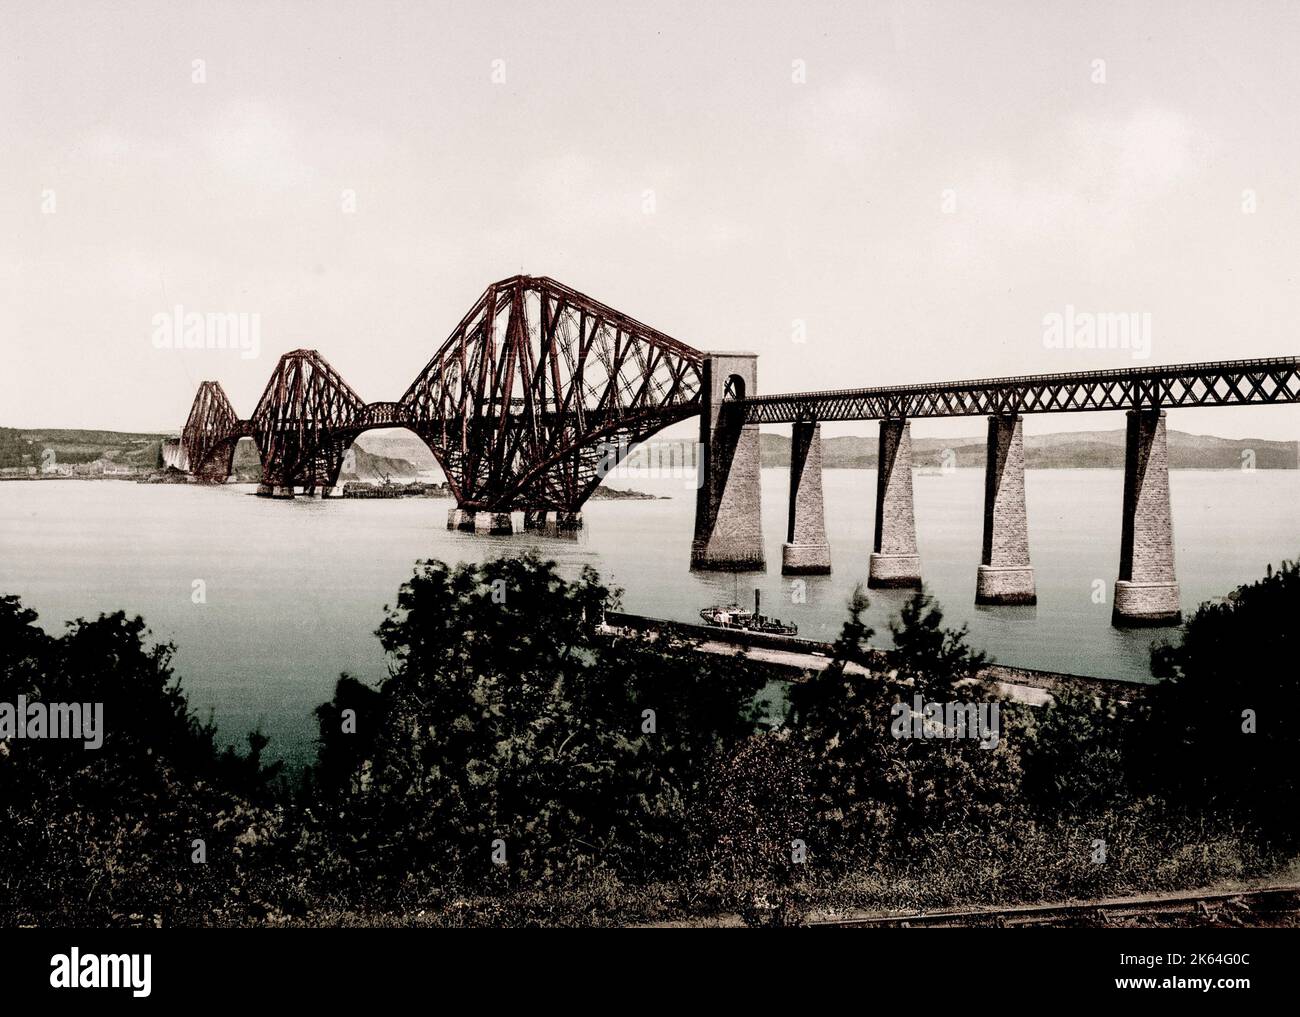 Vintage 19th century / 1900 photograph: the Forth Rail Bridge, over the River Forth, Scotland. Stock Photo